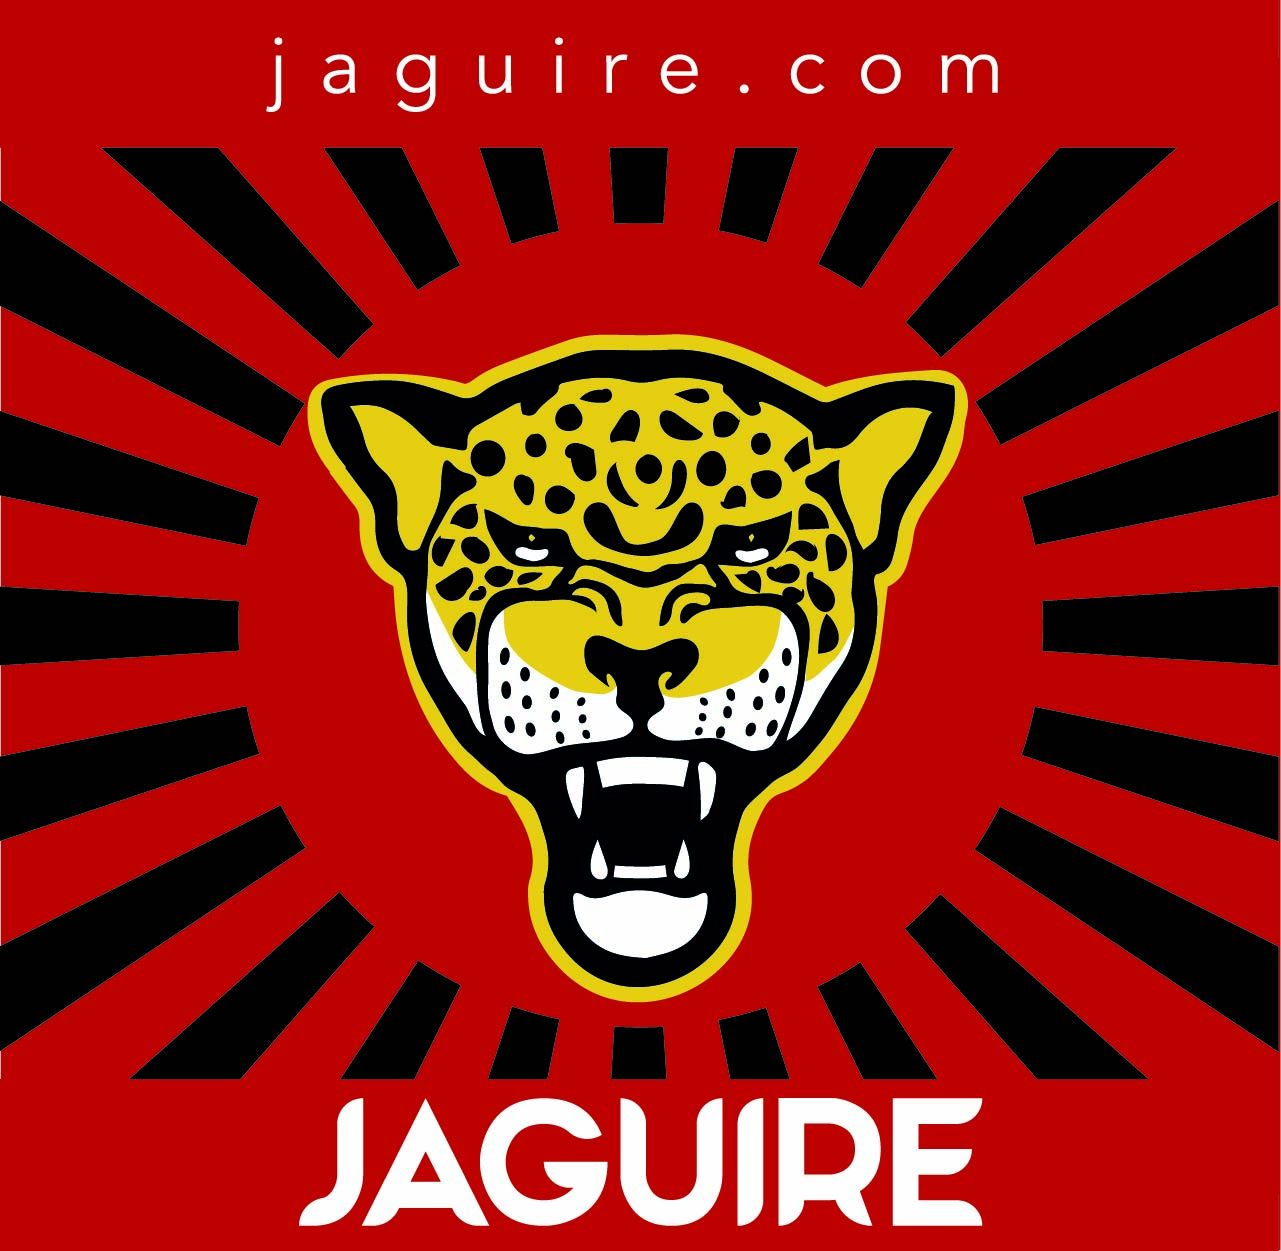 jaguire - Branding Name